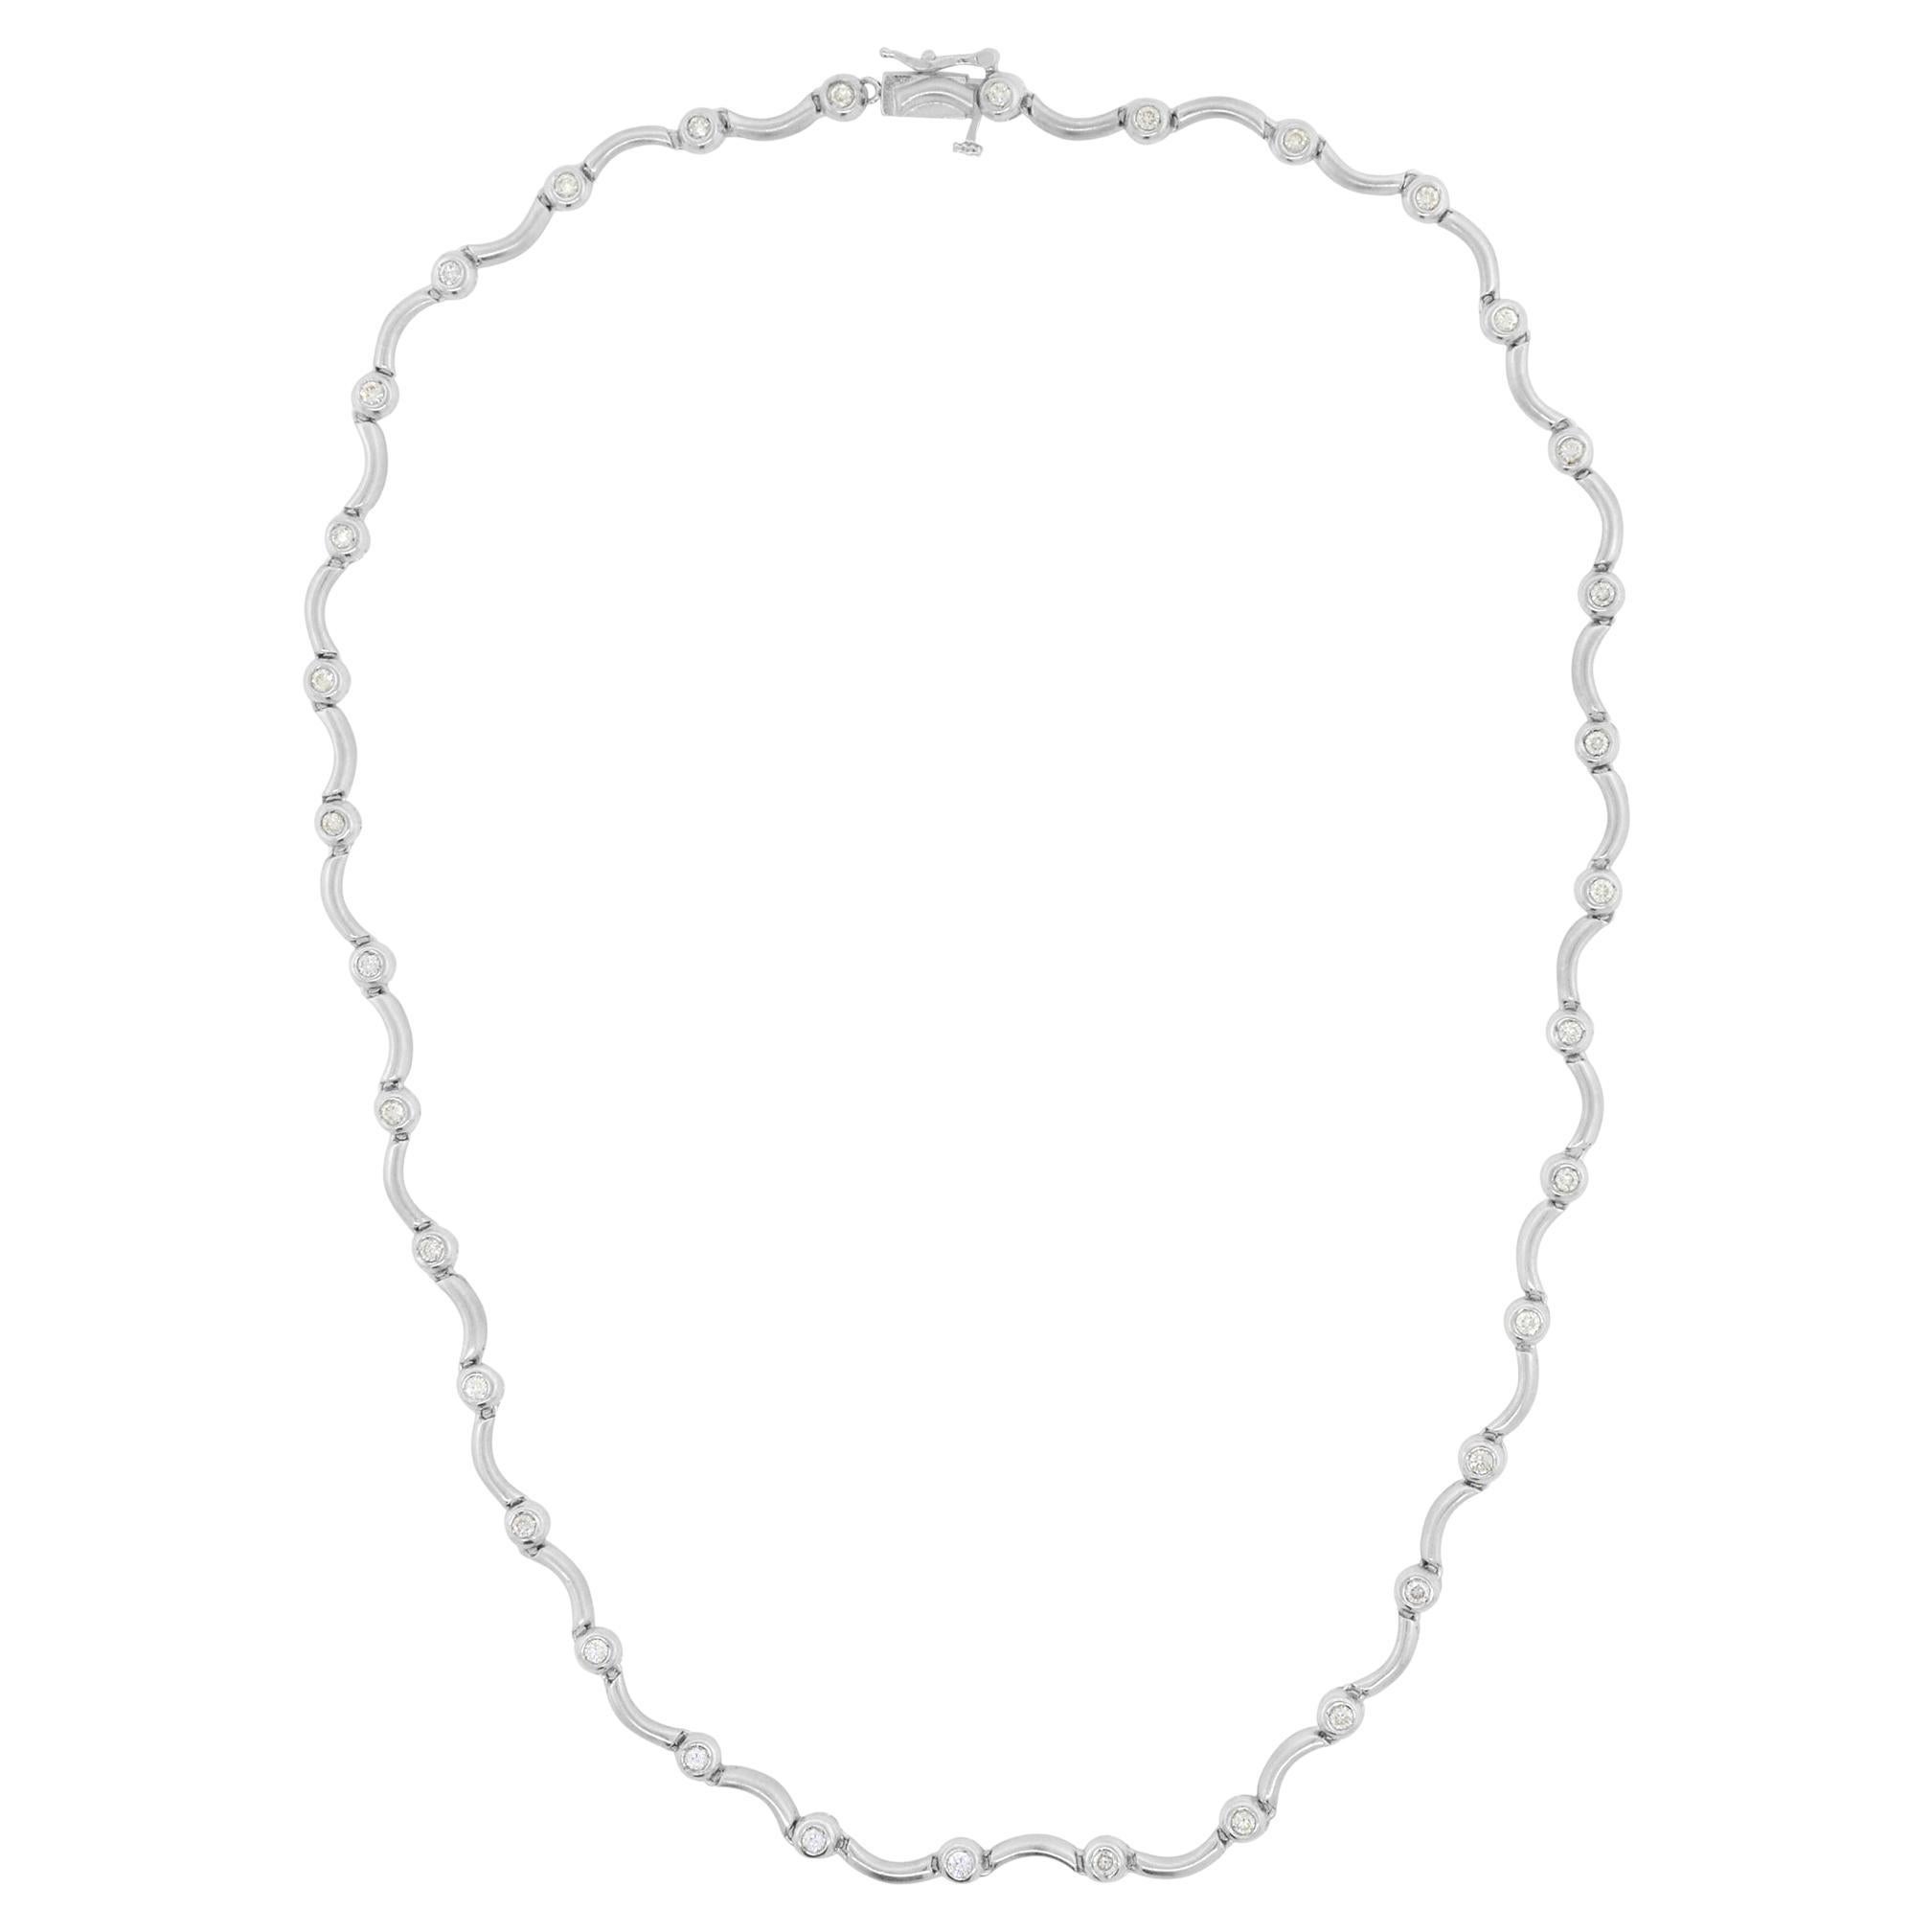 Rachel Koen Diamond Link Necklace 18k White Gold 0.95Cttw For Sale